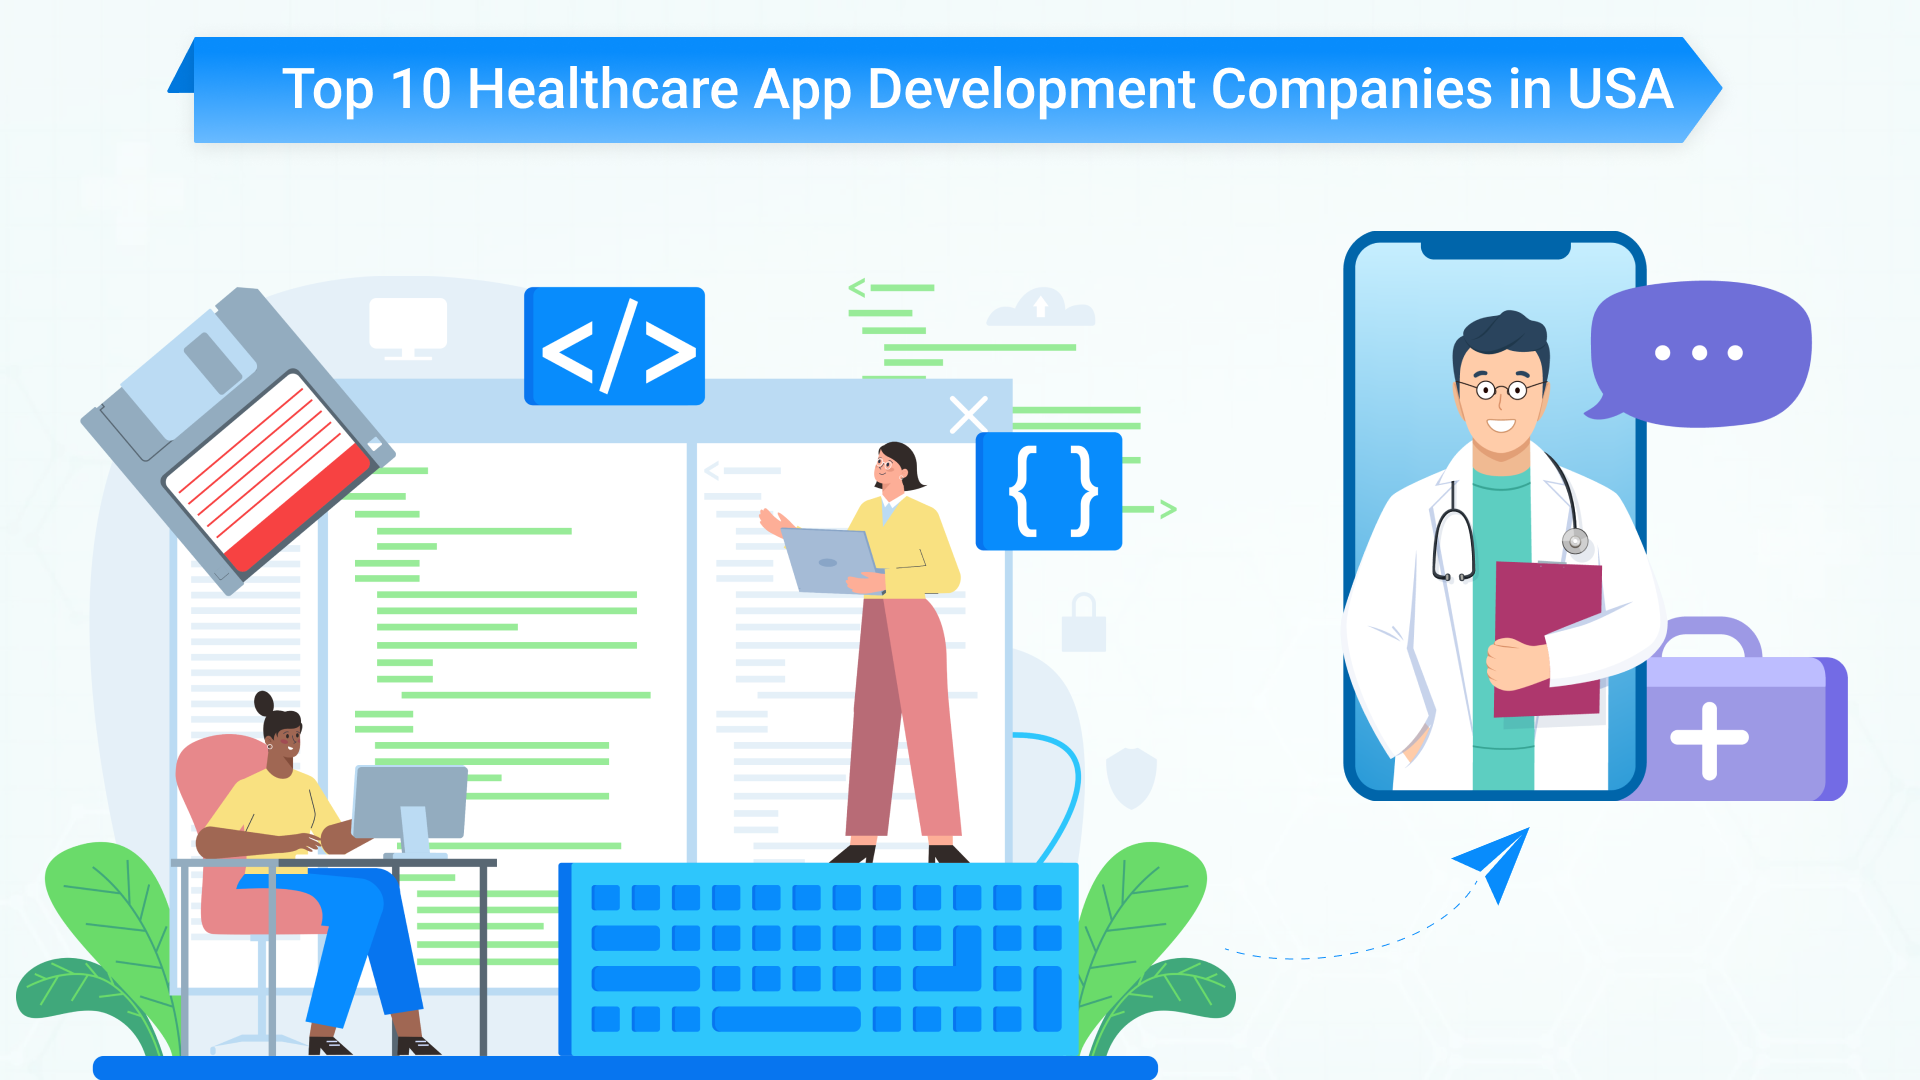 Top 10 Healthcare App Development Companies in USA